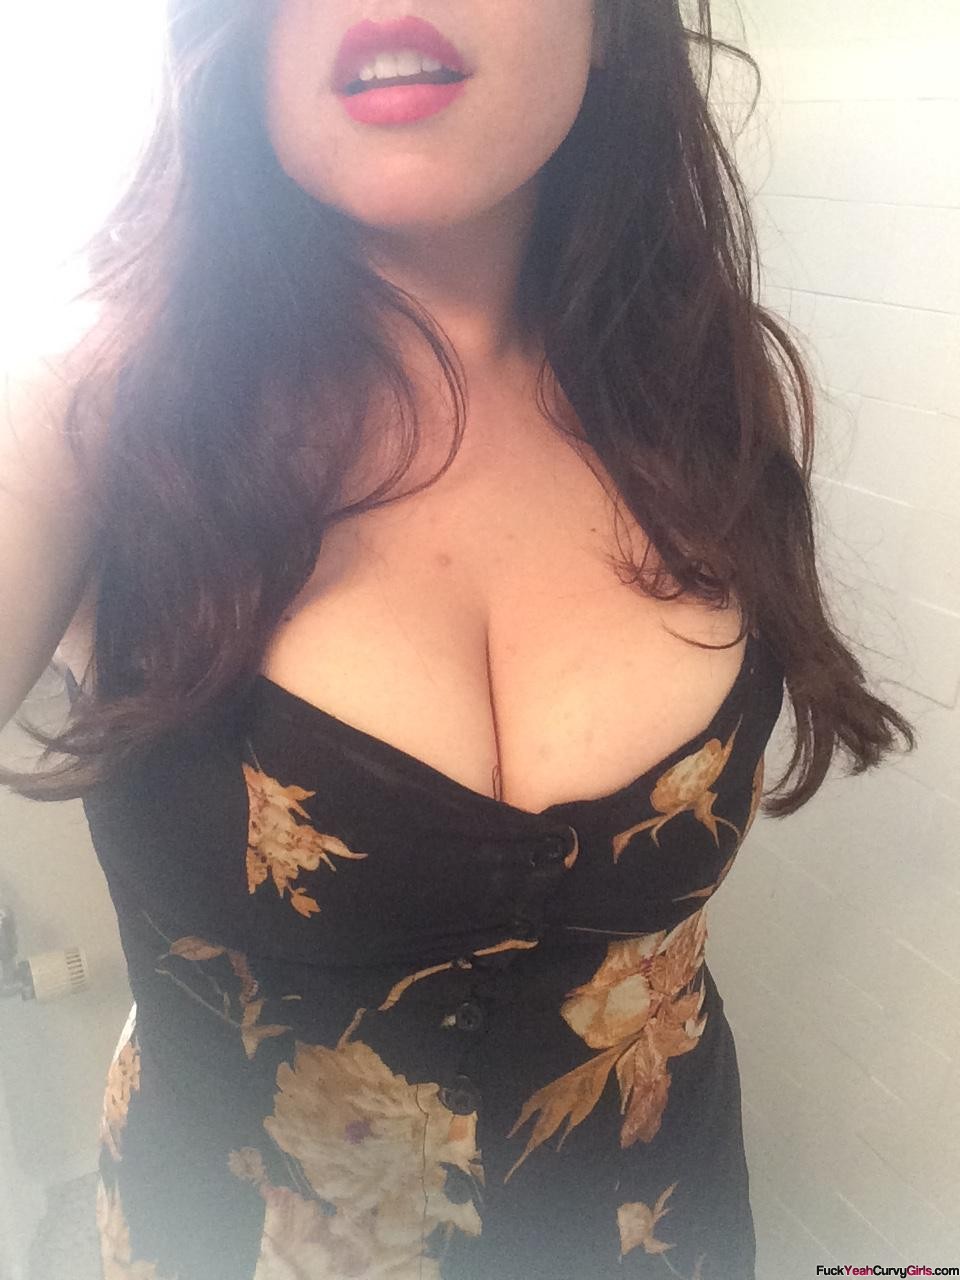 curvy amateur milf bra cleavage selfie hot video picture